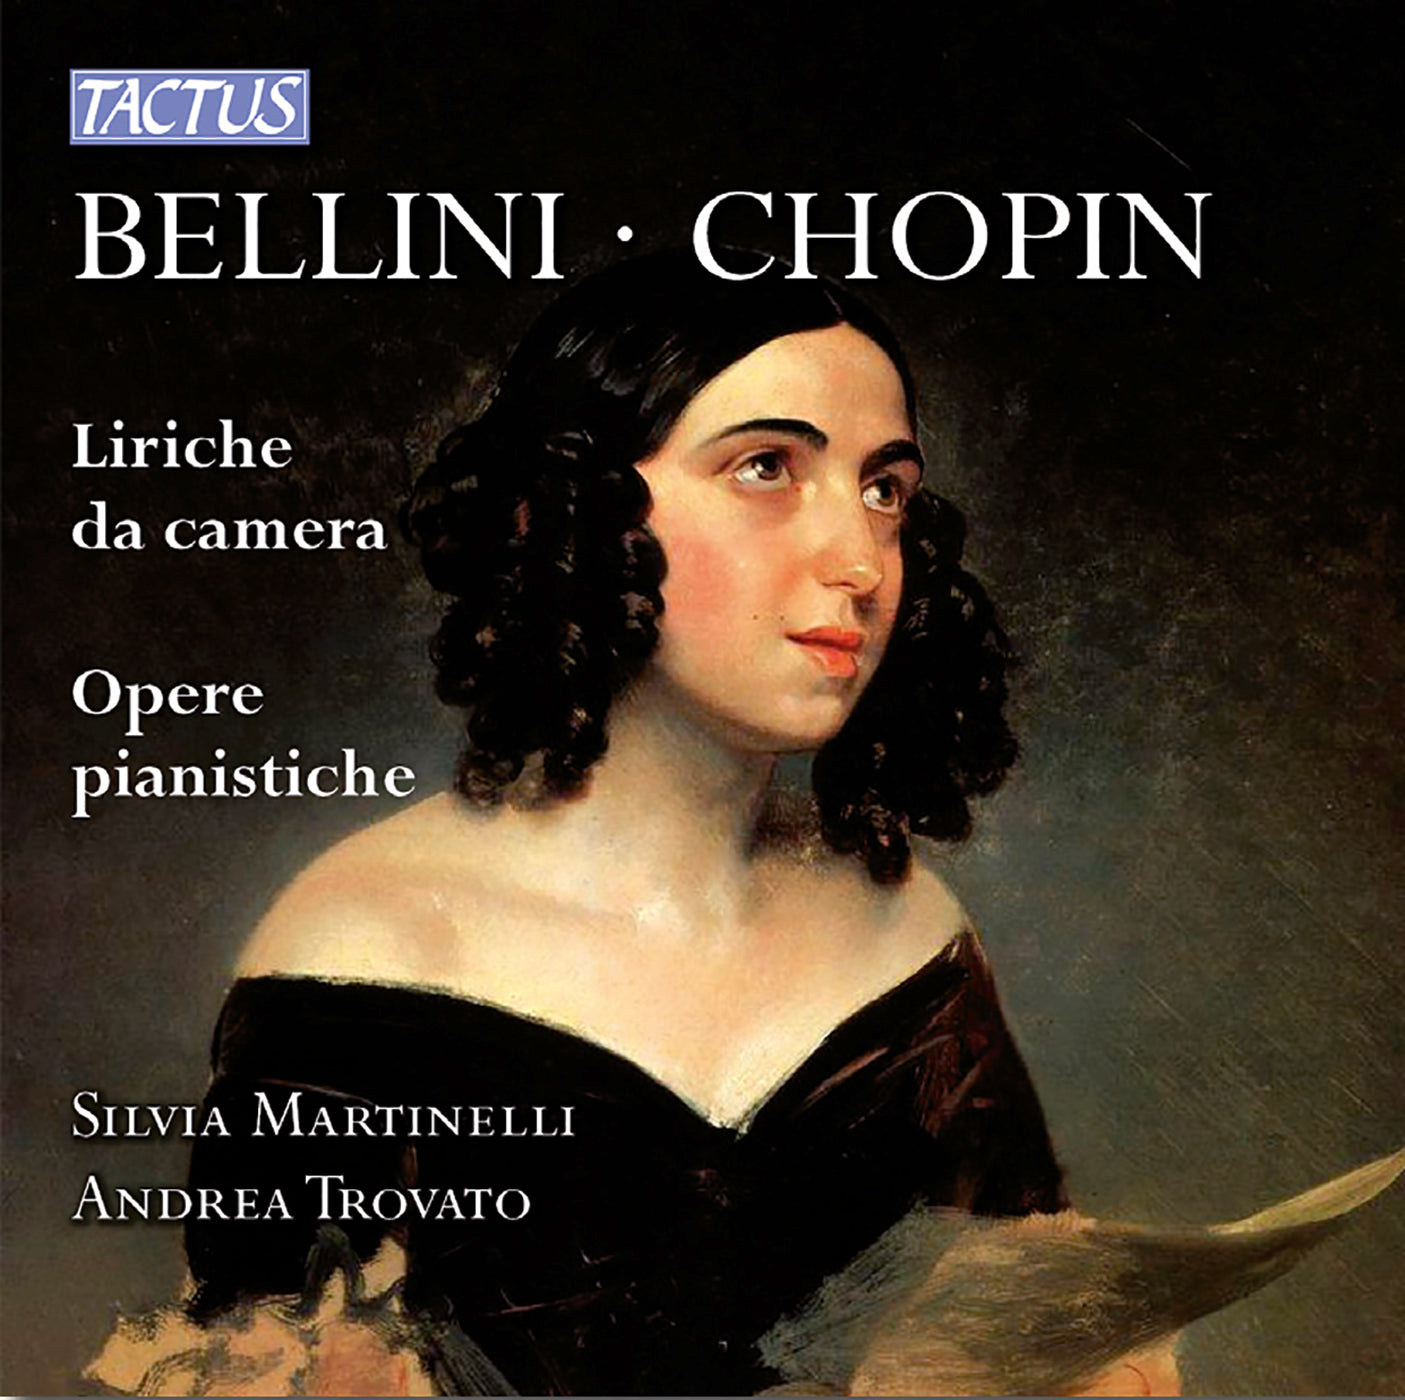 Bellini & Chopin: Liriche da camera & Opere pianistiche